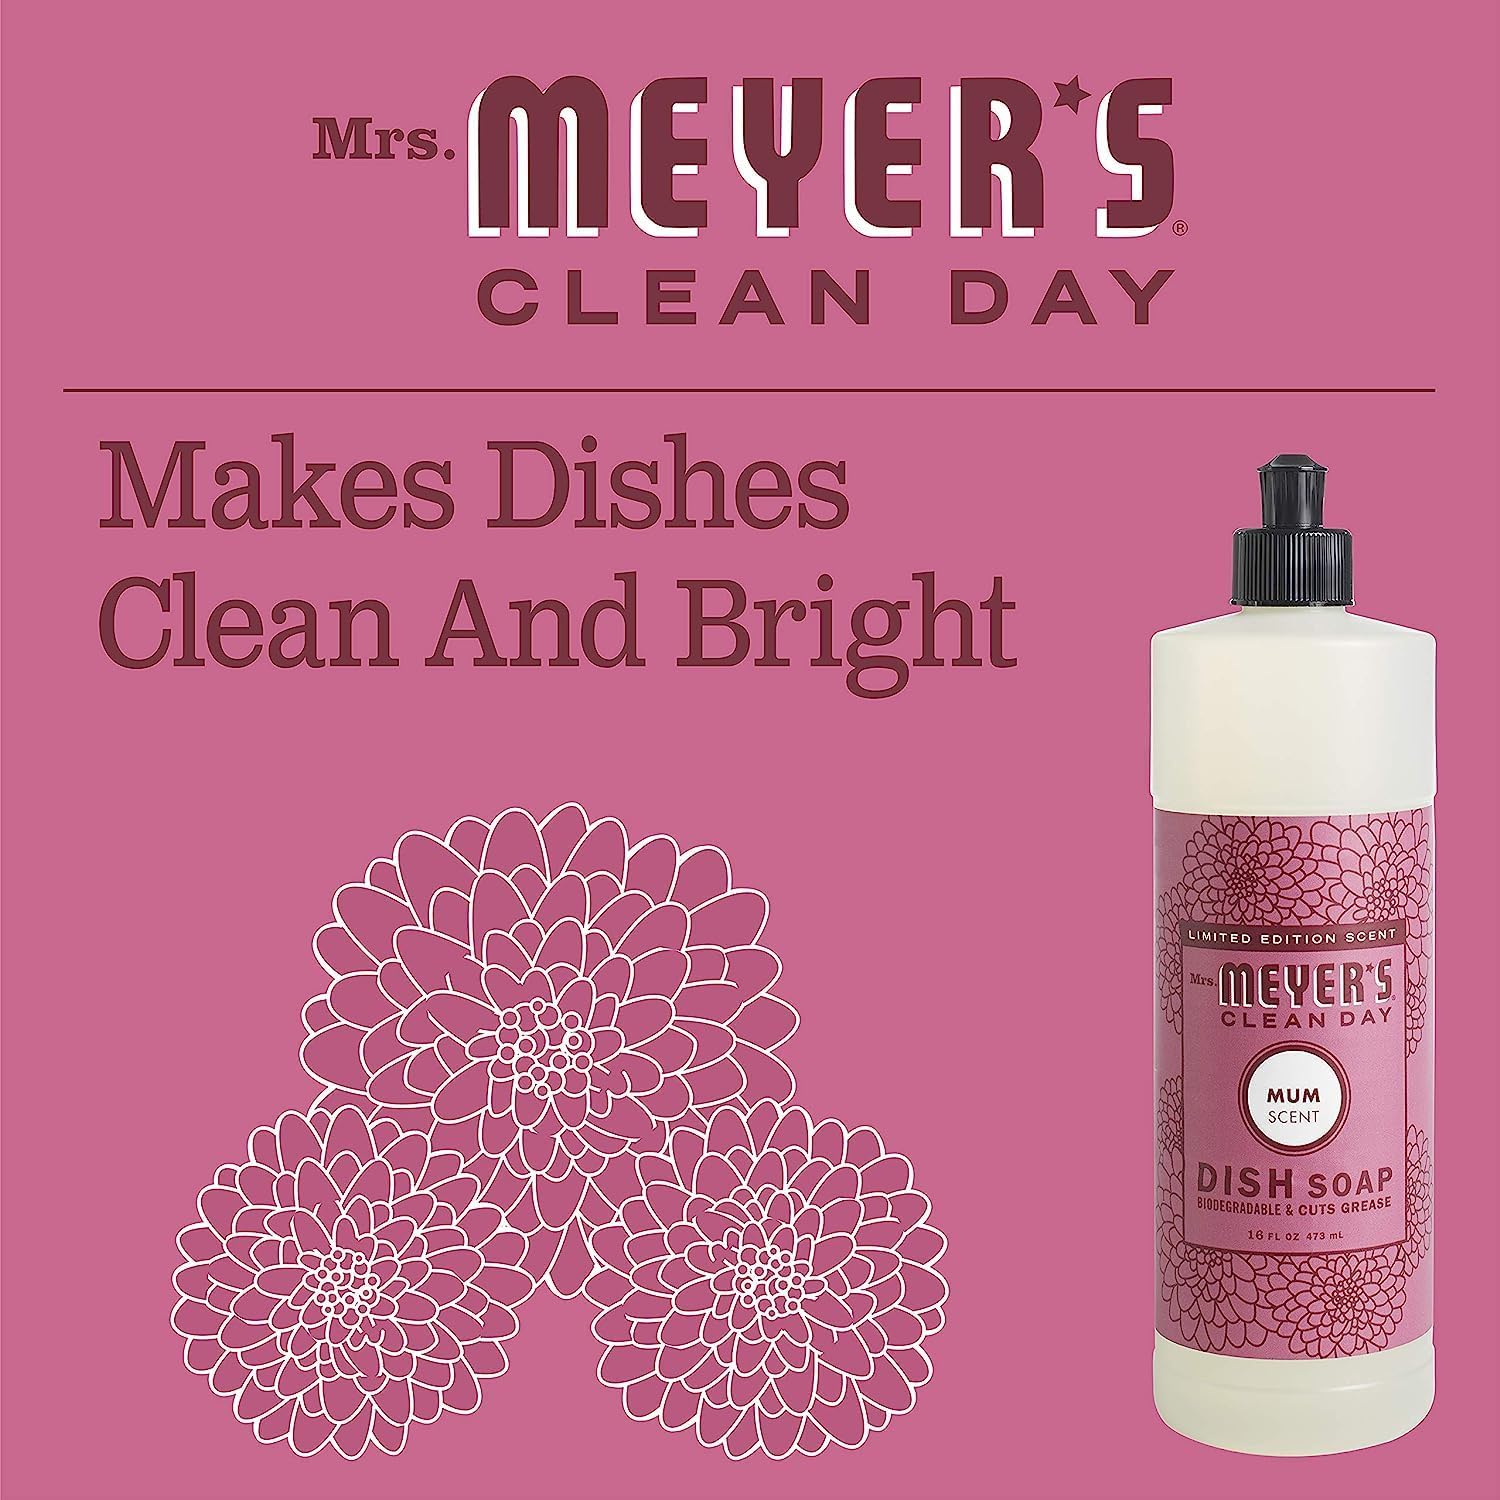 MRS. MEYER'S CLEAN DAY Variety, 1 Mrs. Meyer's Liquid Dish Soap, Acorn Spice, 16 OZ, 1 Mrs. Meyer's Liquid Dish Soap Mum, 16 OZ, 1 CT : Health & Household